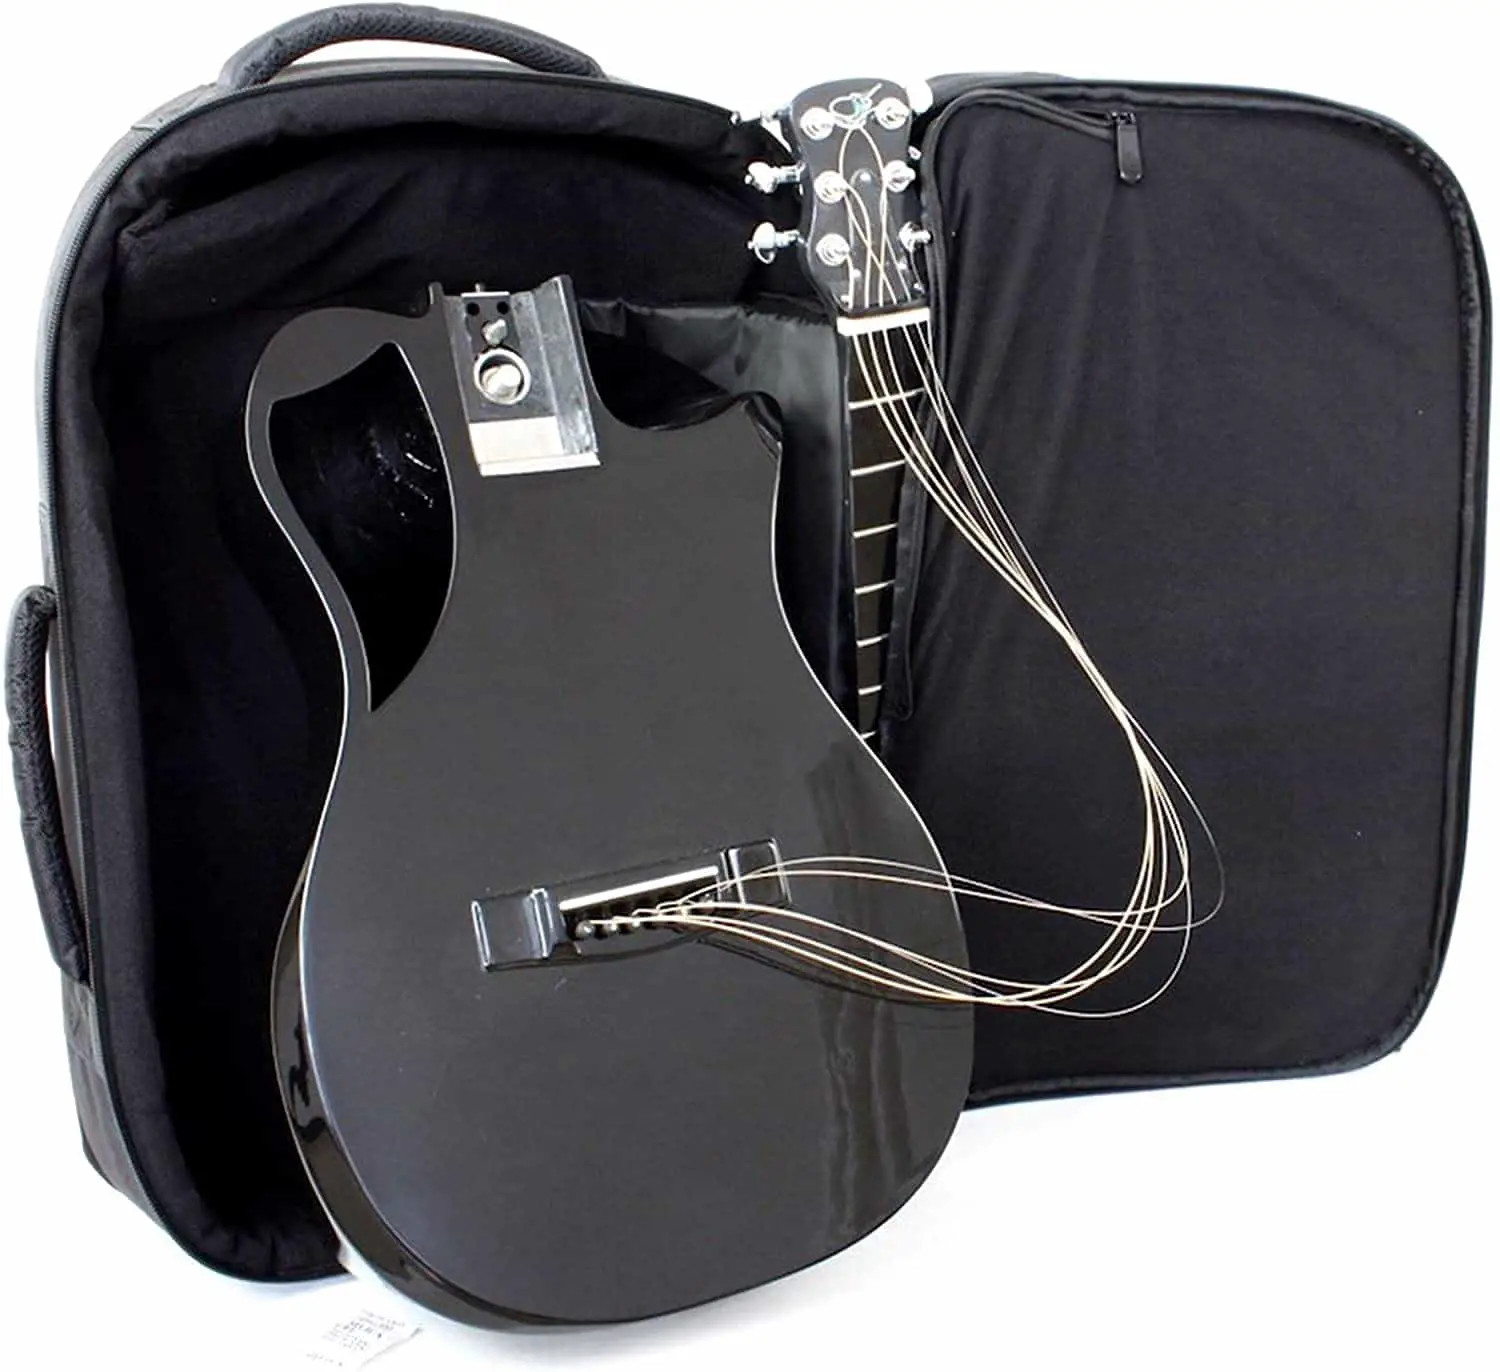 Best quality folding carbon fiber guitar for travel- Journey Instruments OF660